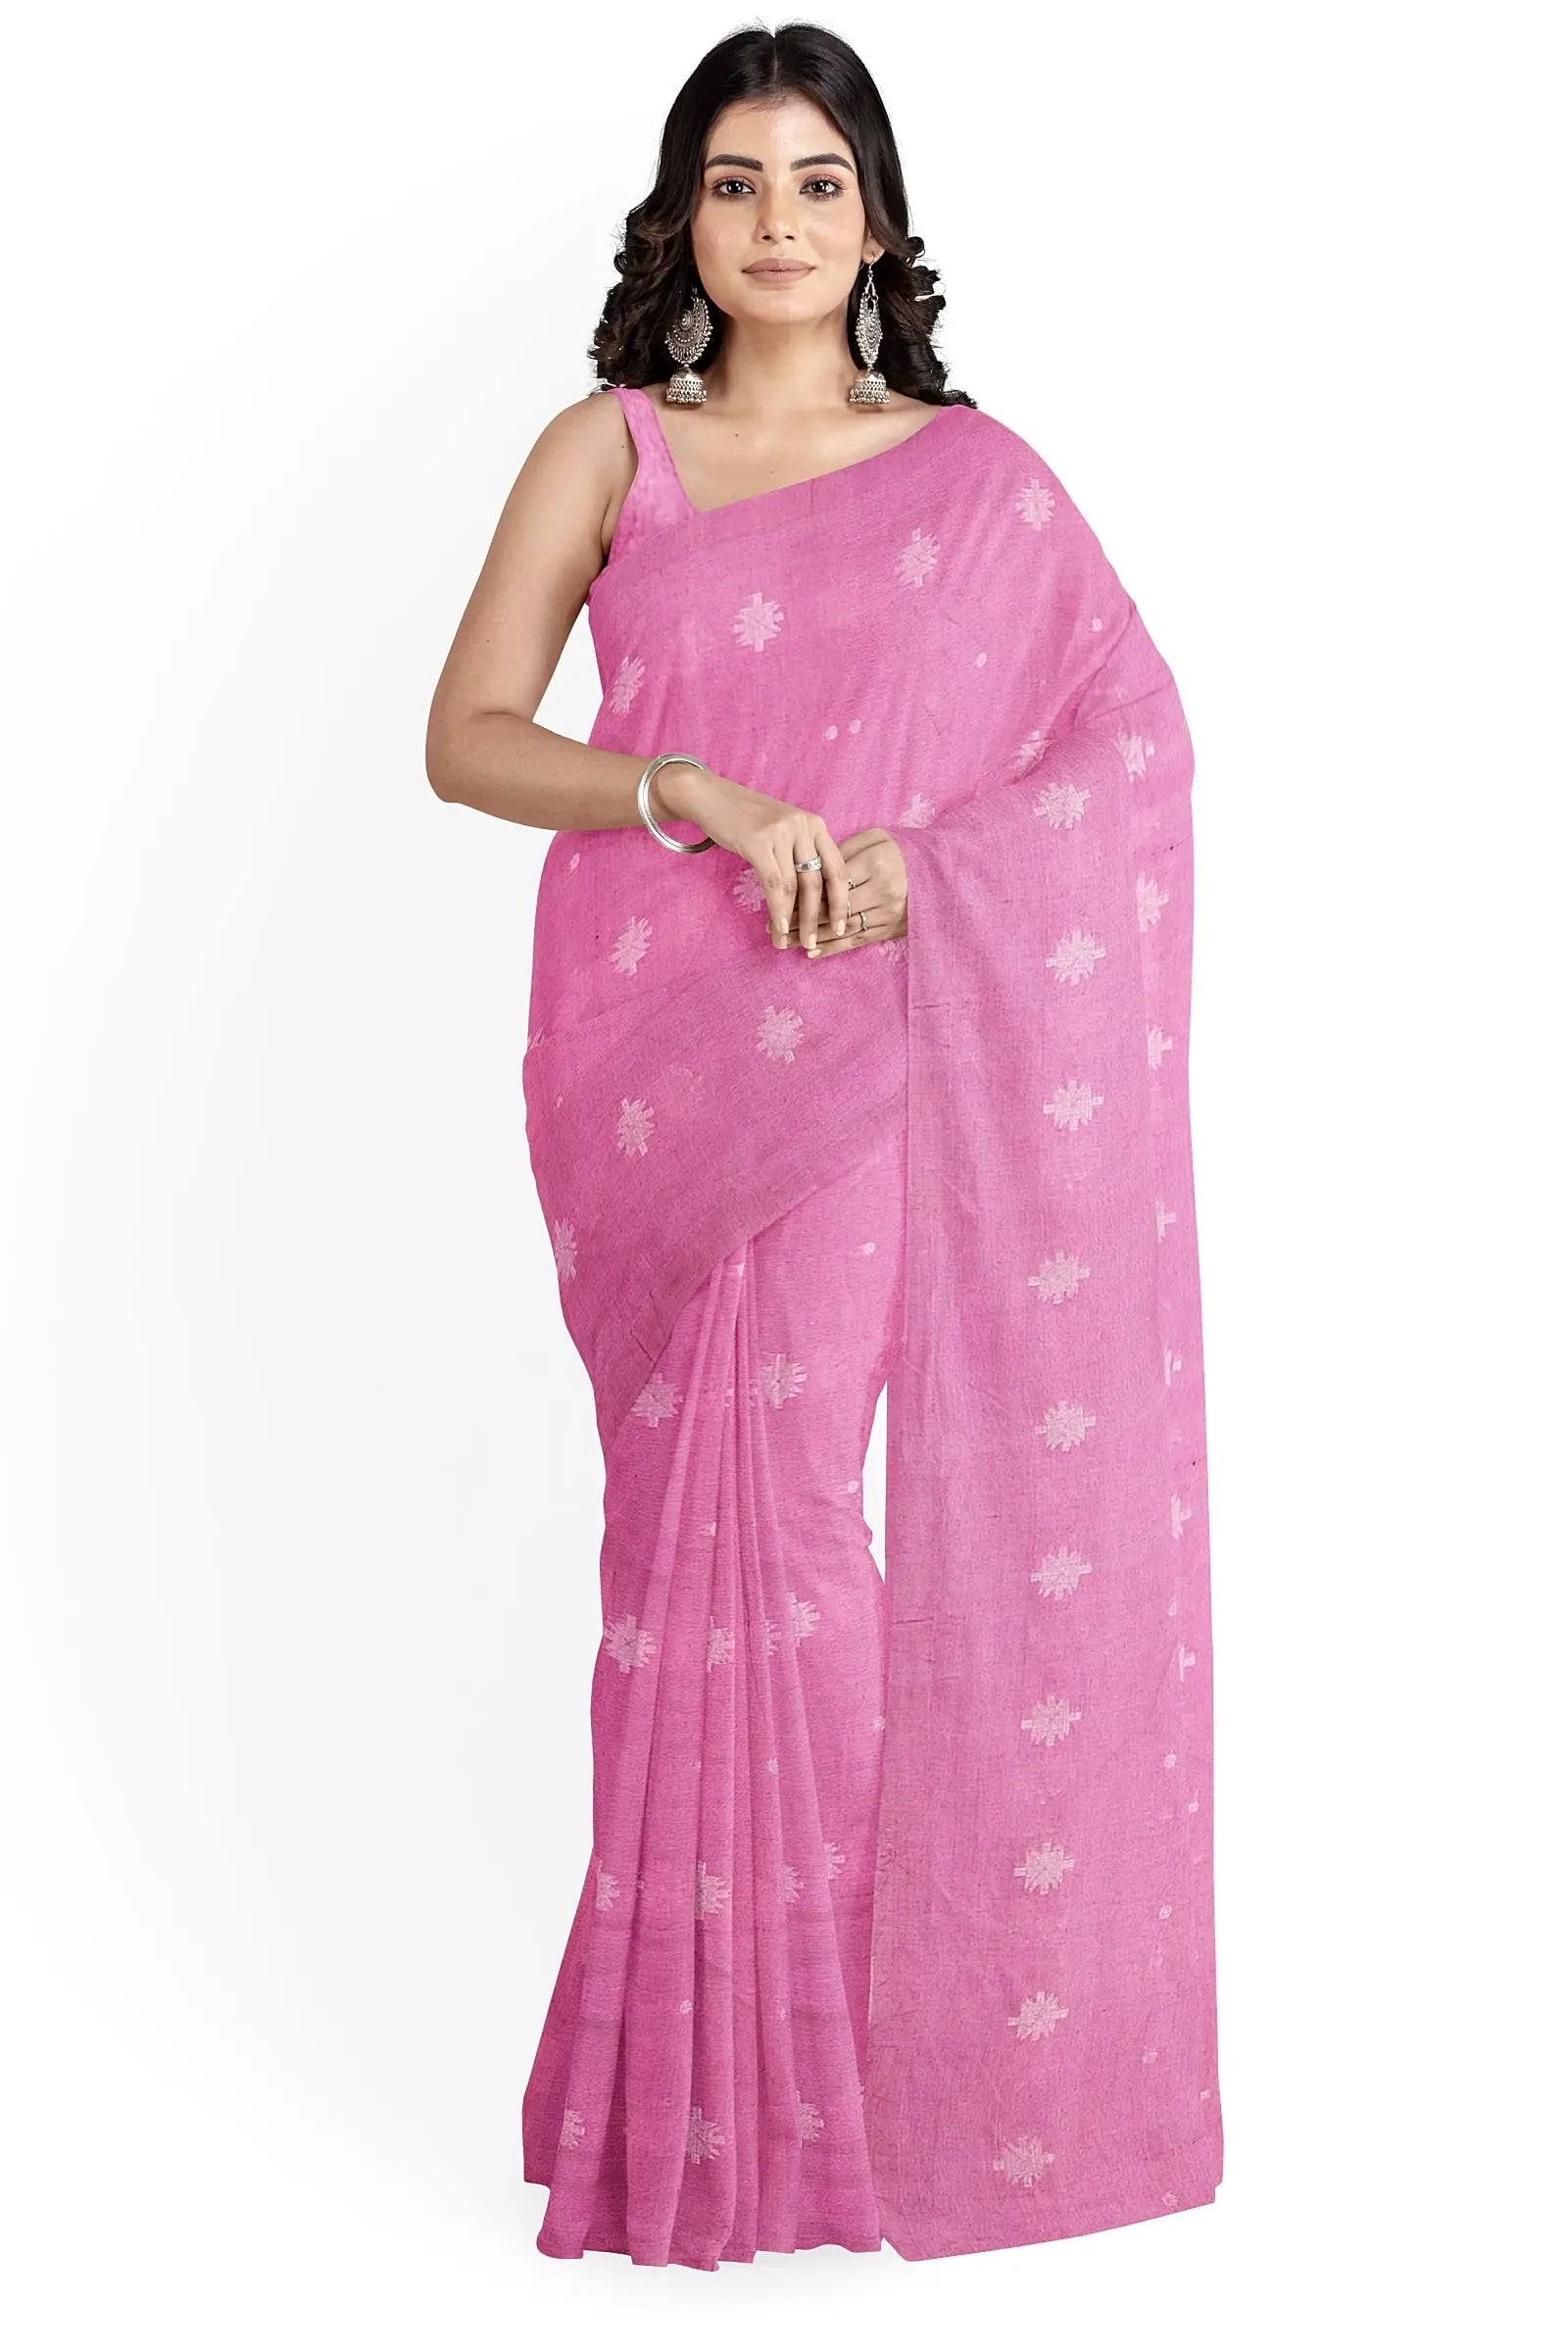 Khadi cotton star baby pink Putul's fashion